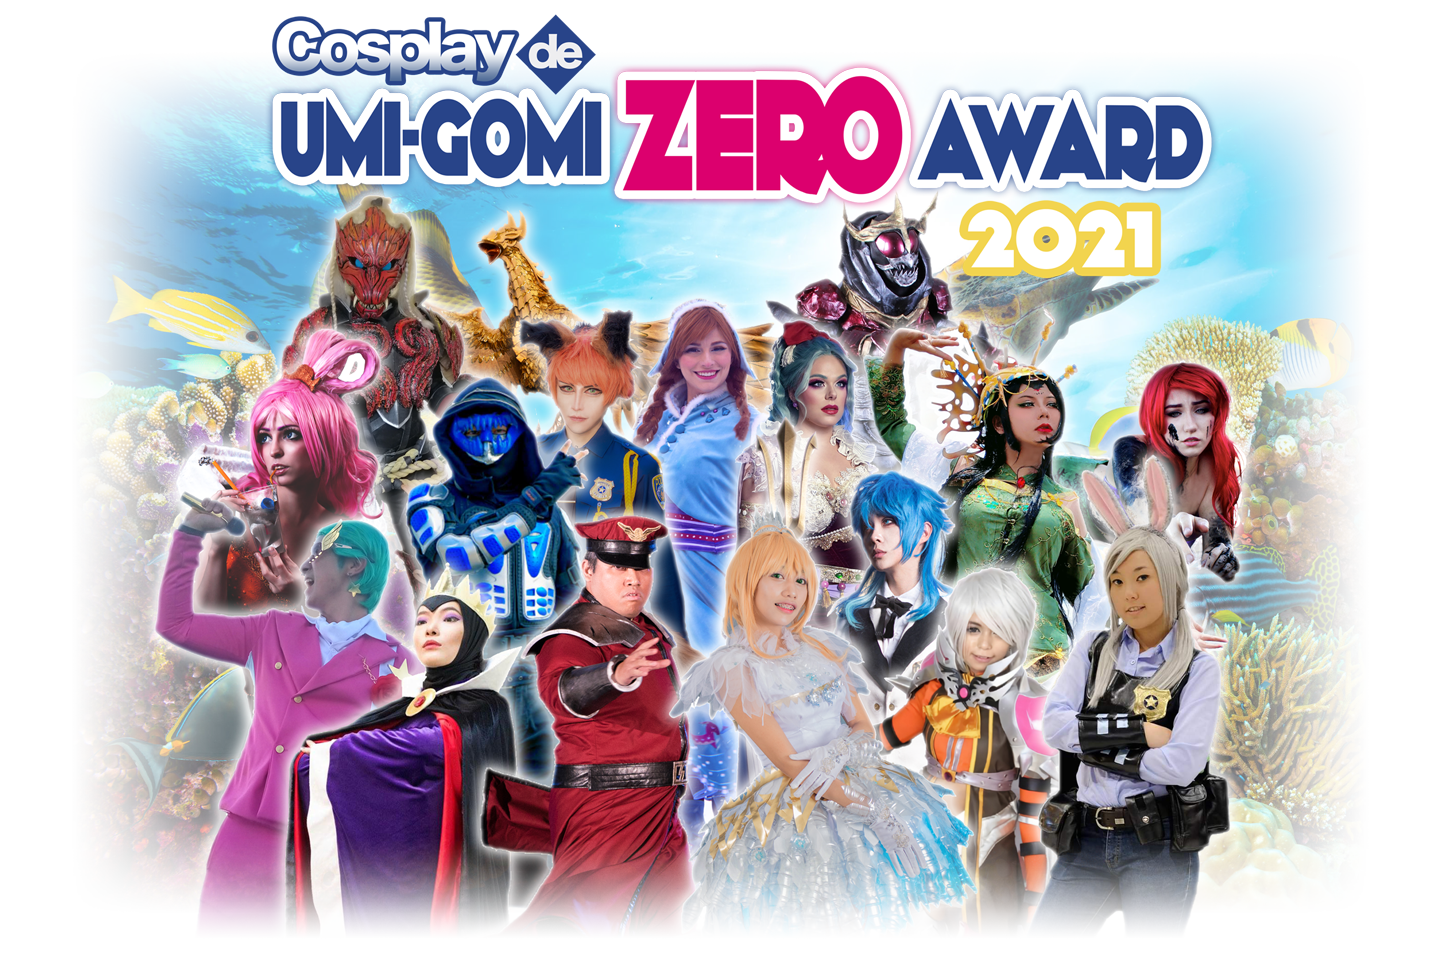 Cosplay de Umigomi Zero Award